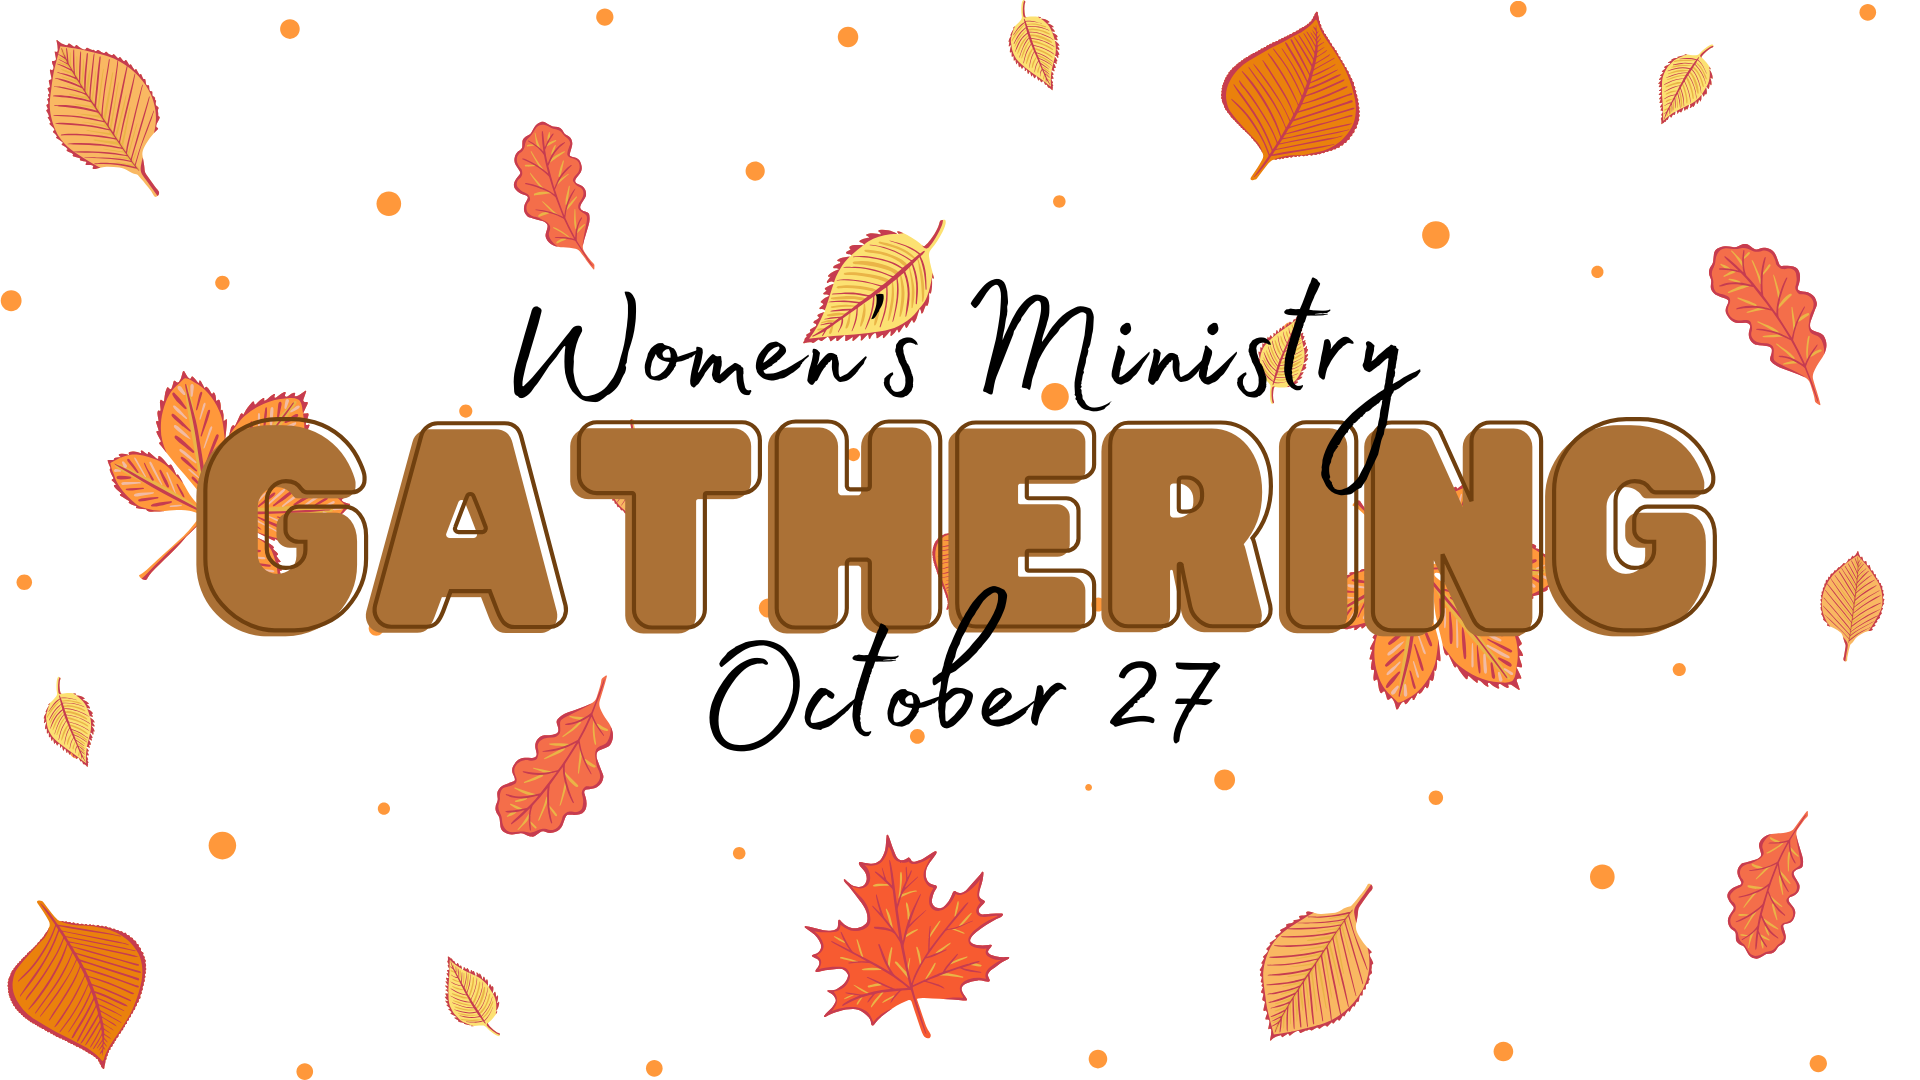 Women's Ministry Gathering